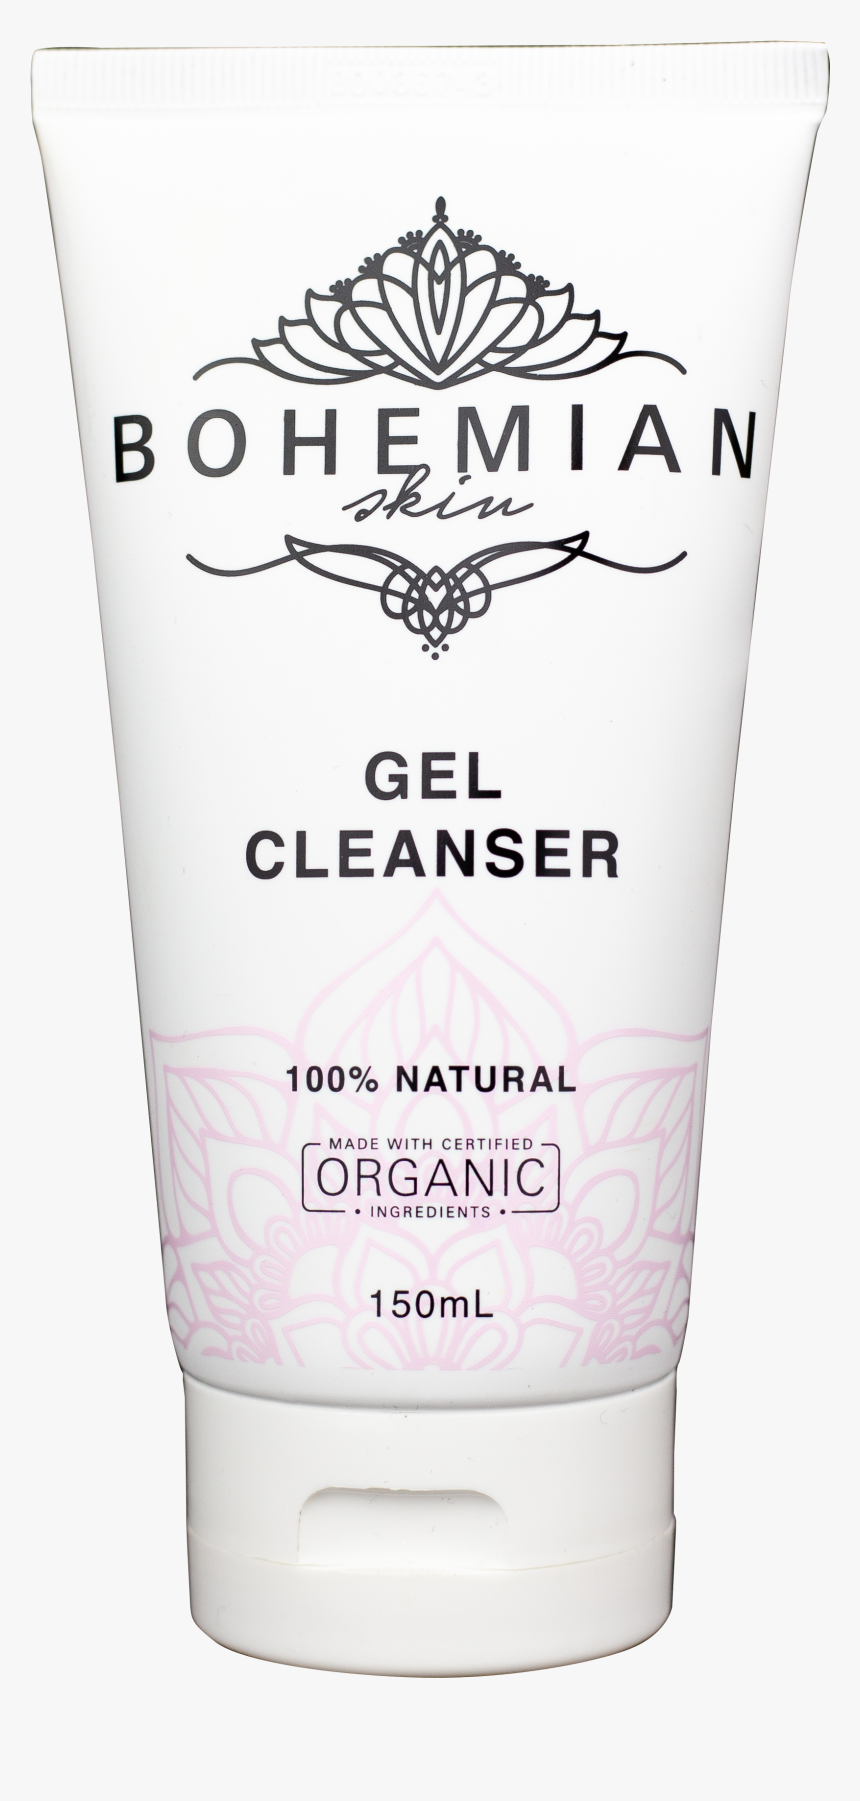 Gel Cleanser 150ml - Bohemian Skin Gel Cleanser Uk, HD Png Download, Free Download